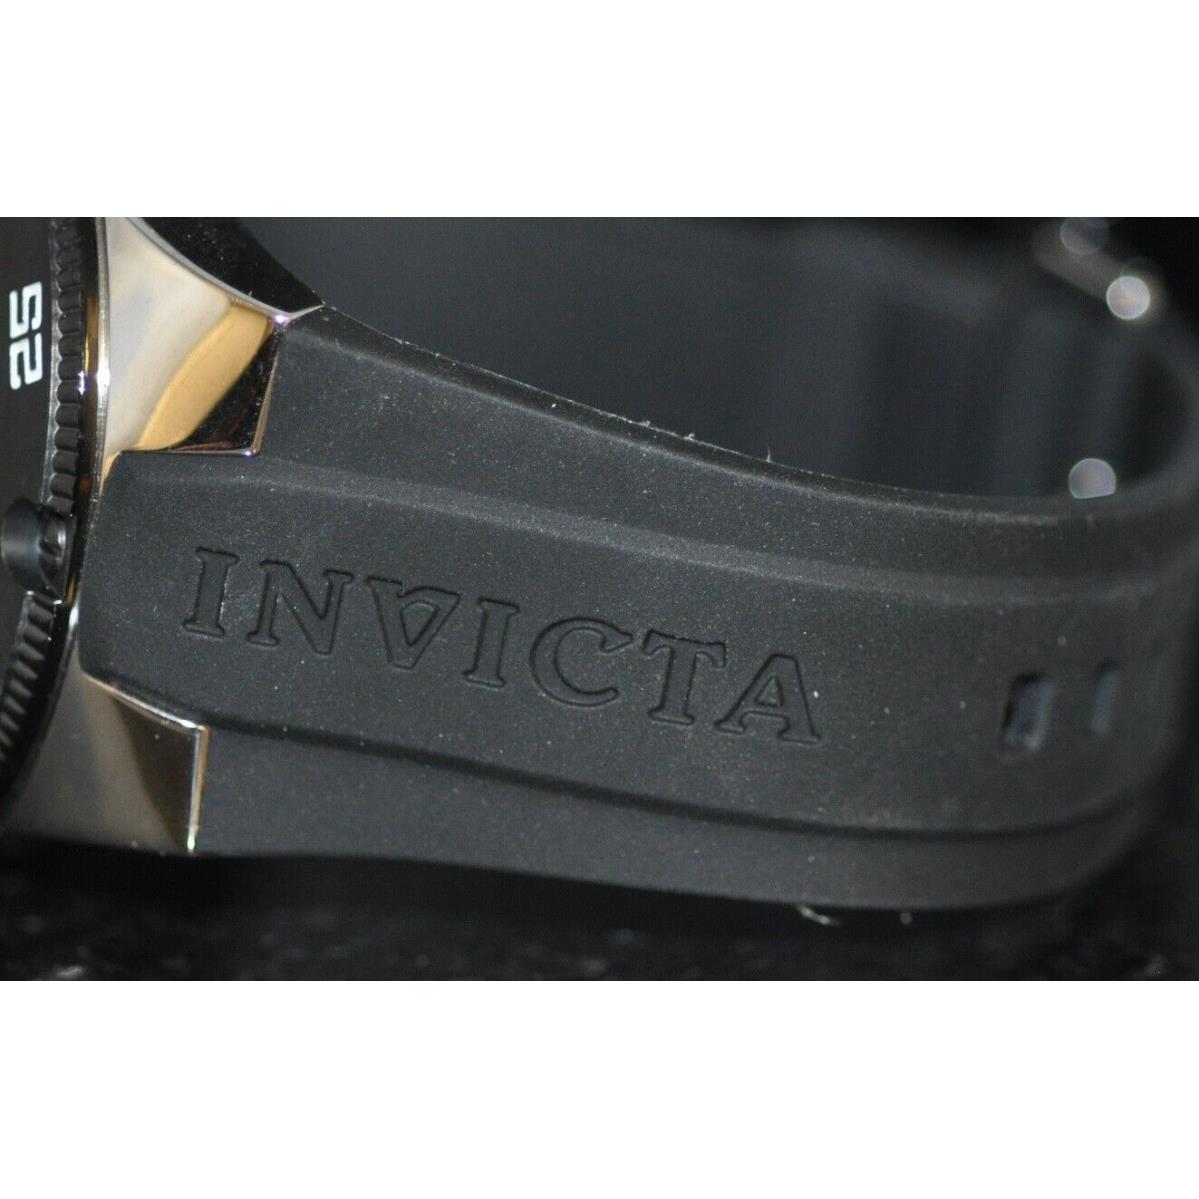 Invicta watch Pro Diver - Dial: Silver, Band: Black, Bezel: Black 0